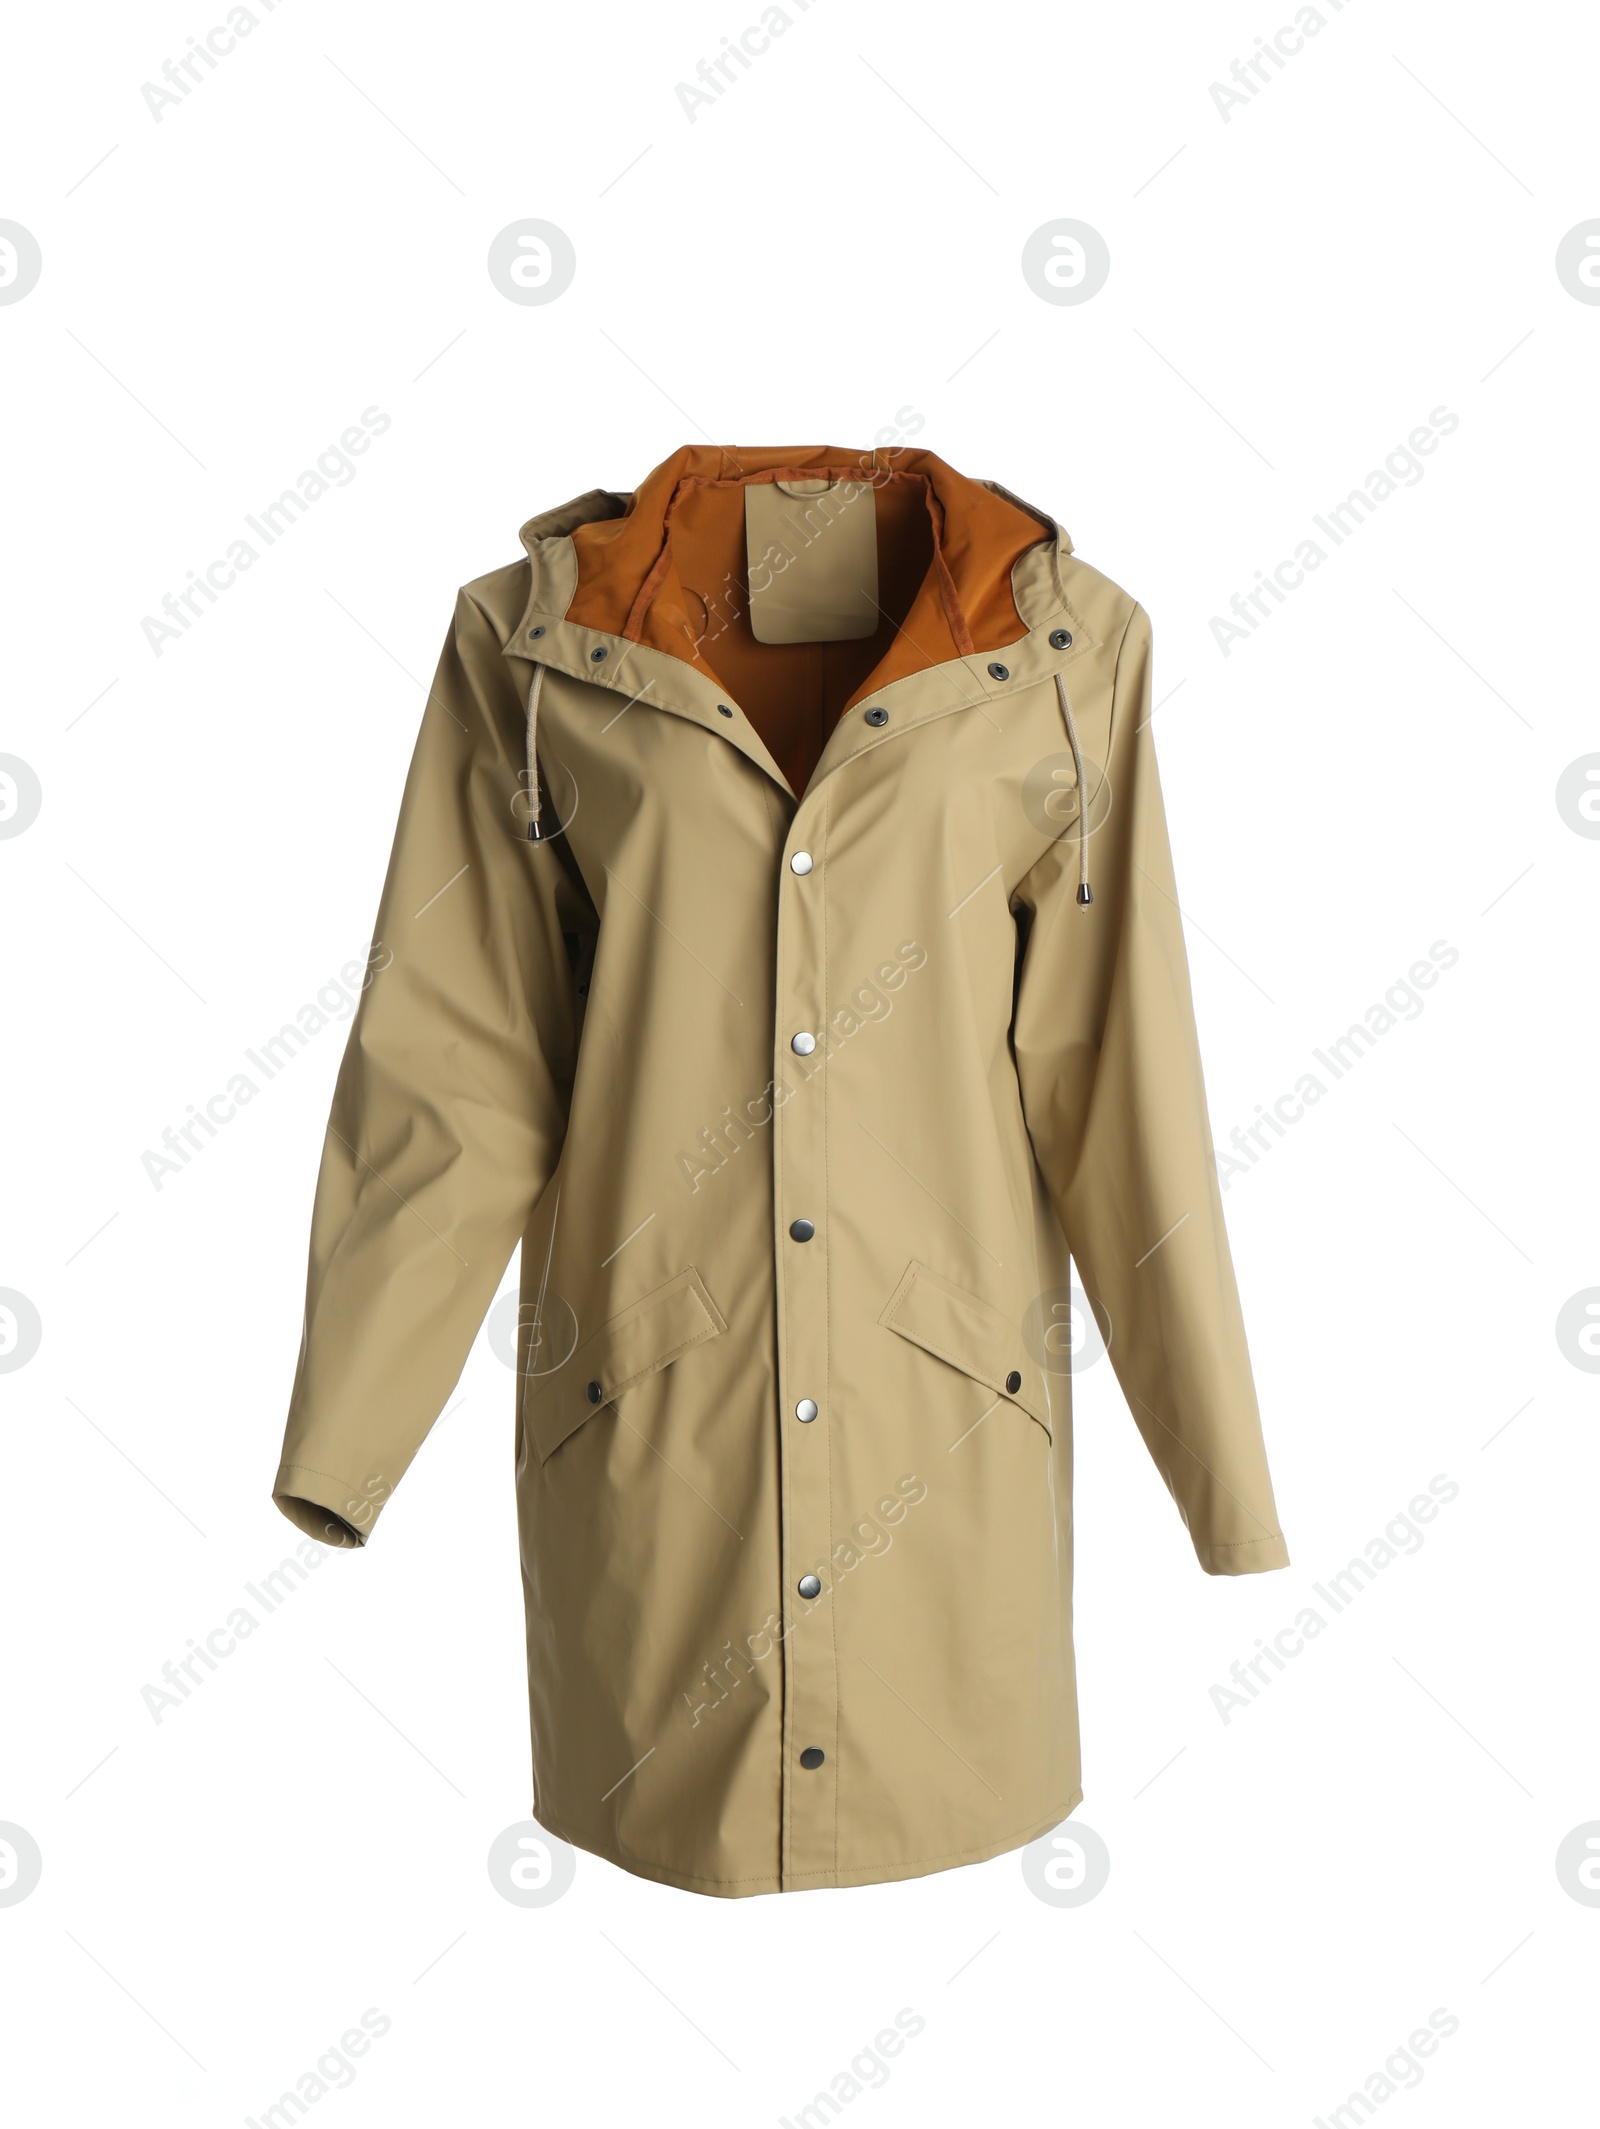 Photo of Warm jacket on mannequin against white background. Stylish clothes